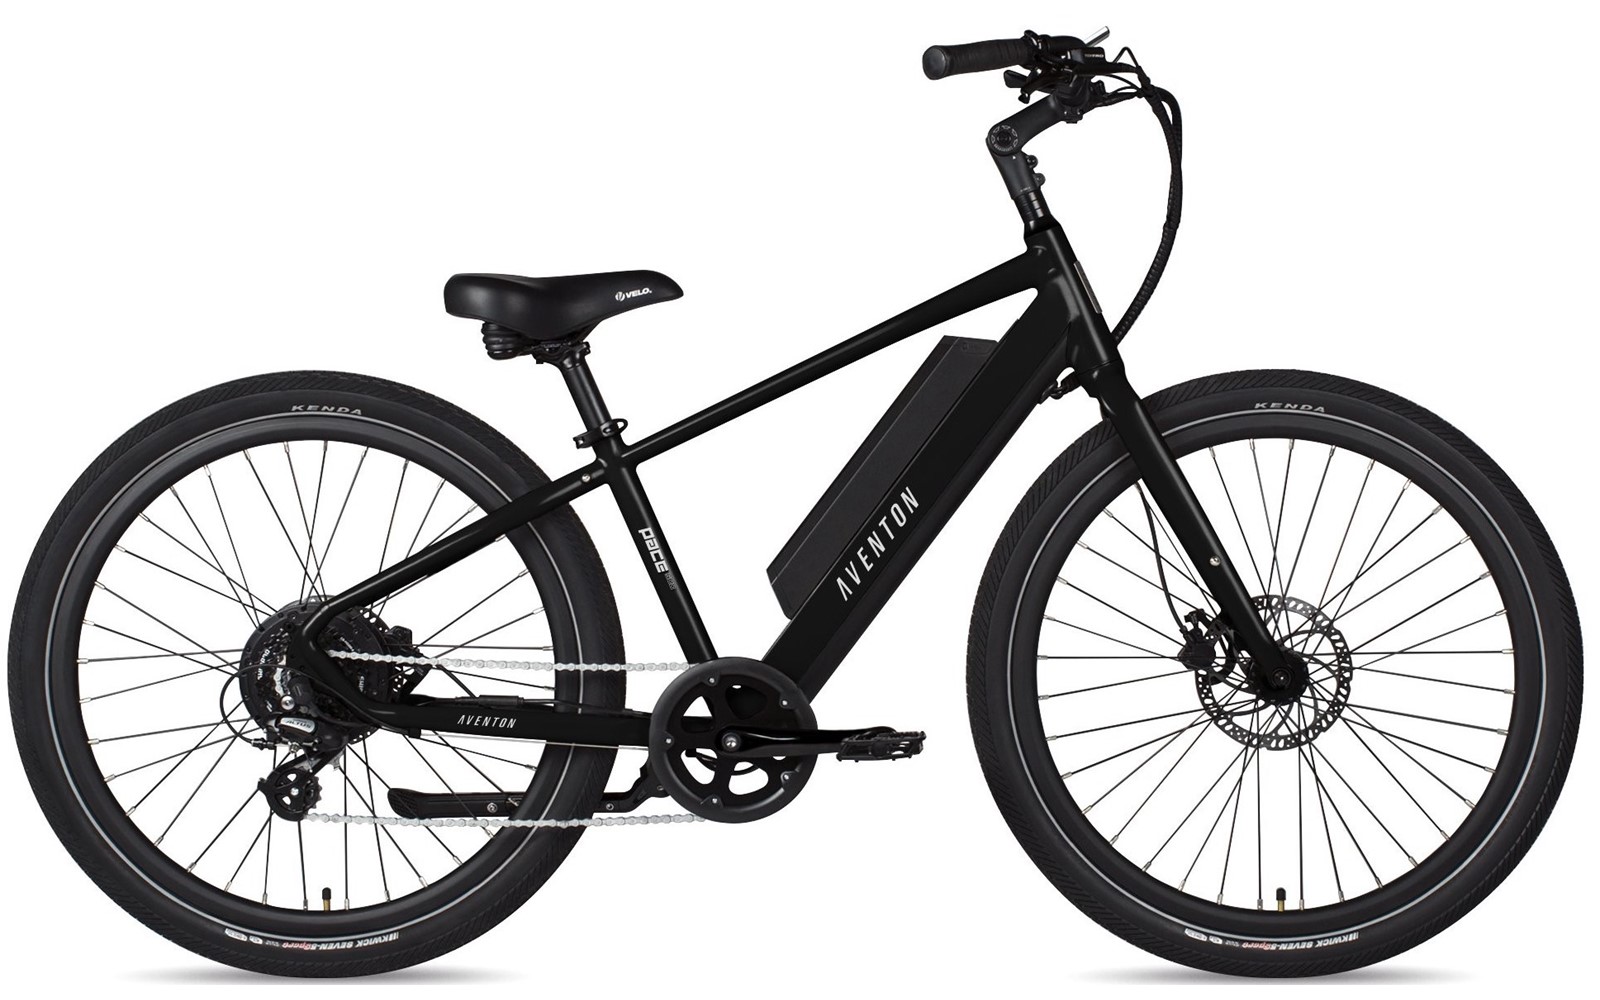 Электровелосипед Aventon Pace 500 Black за 4734,99 руб. в магазине городских велосипедов City Bikes в Минске.